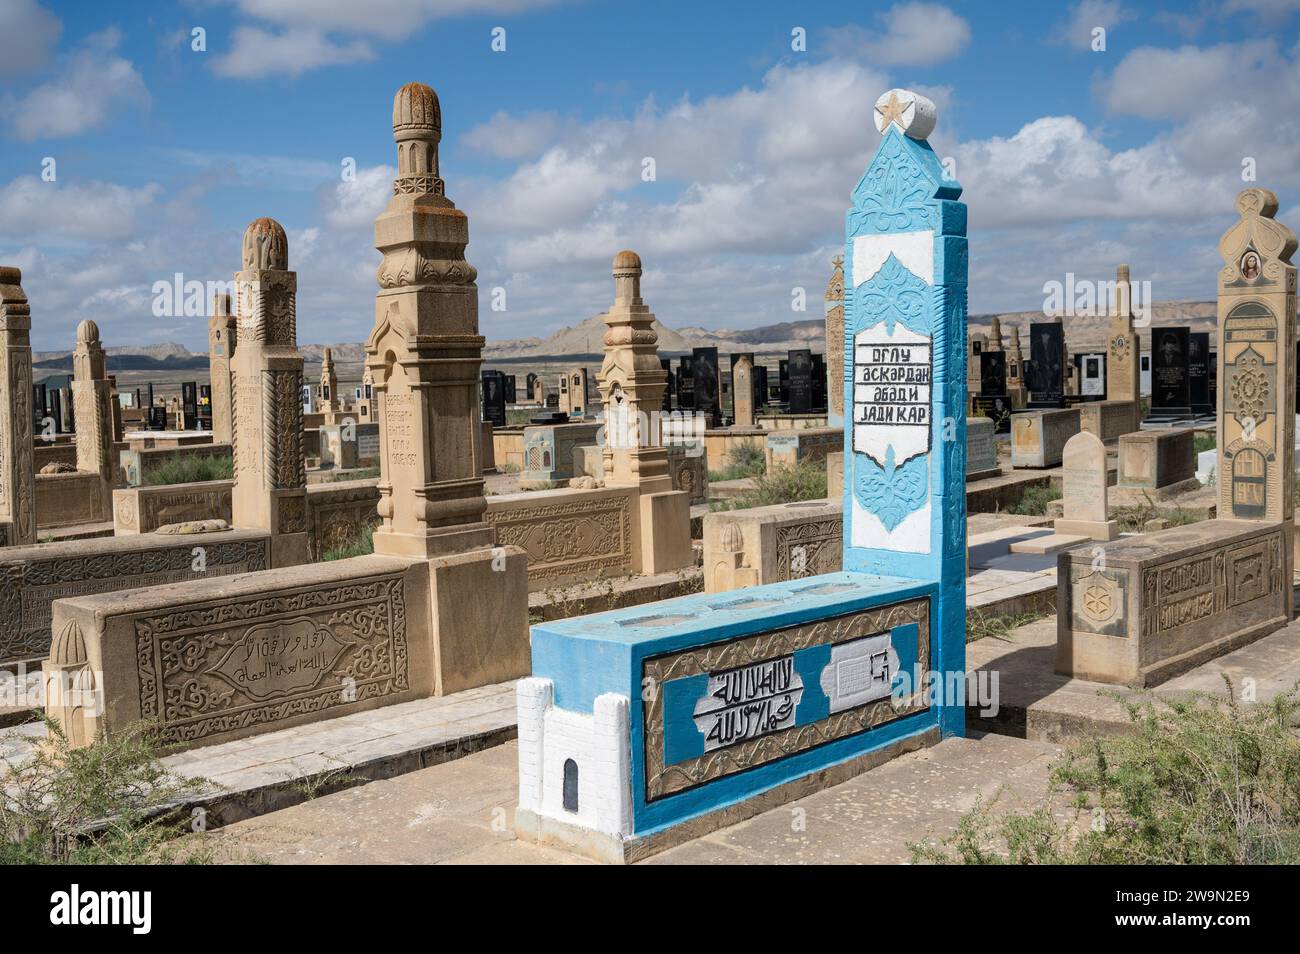 Sofi Hamid / Sofi Hamid Cemetery, Baku. Graves at the islamic cemetery in Sofi Hemid on the outskirts of Baku, Azerbaijan. Stock Photo